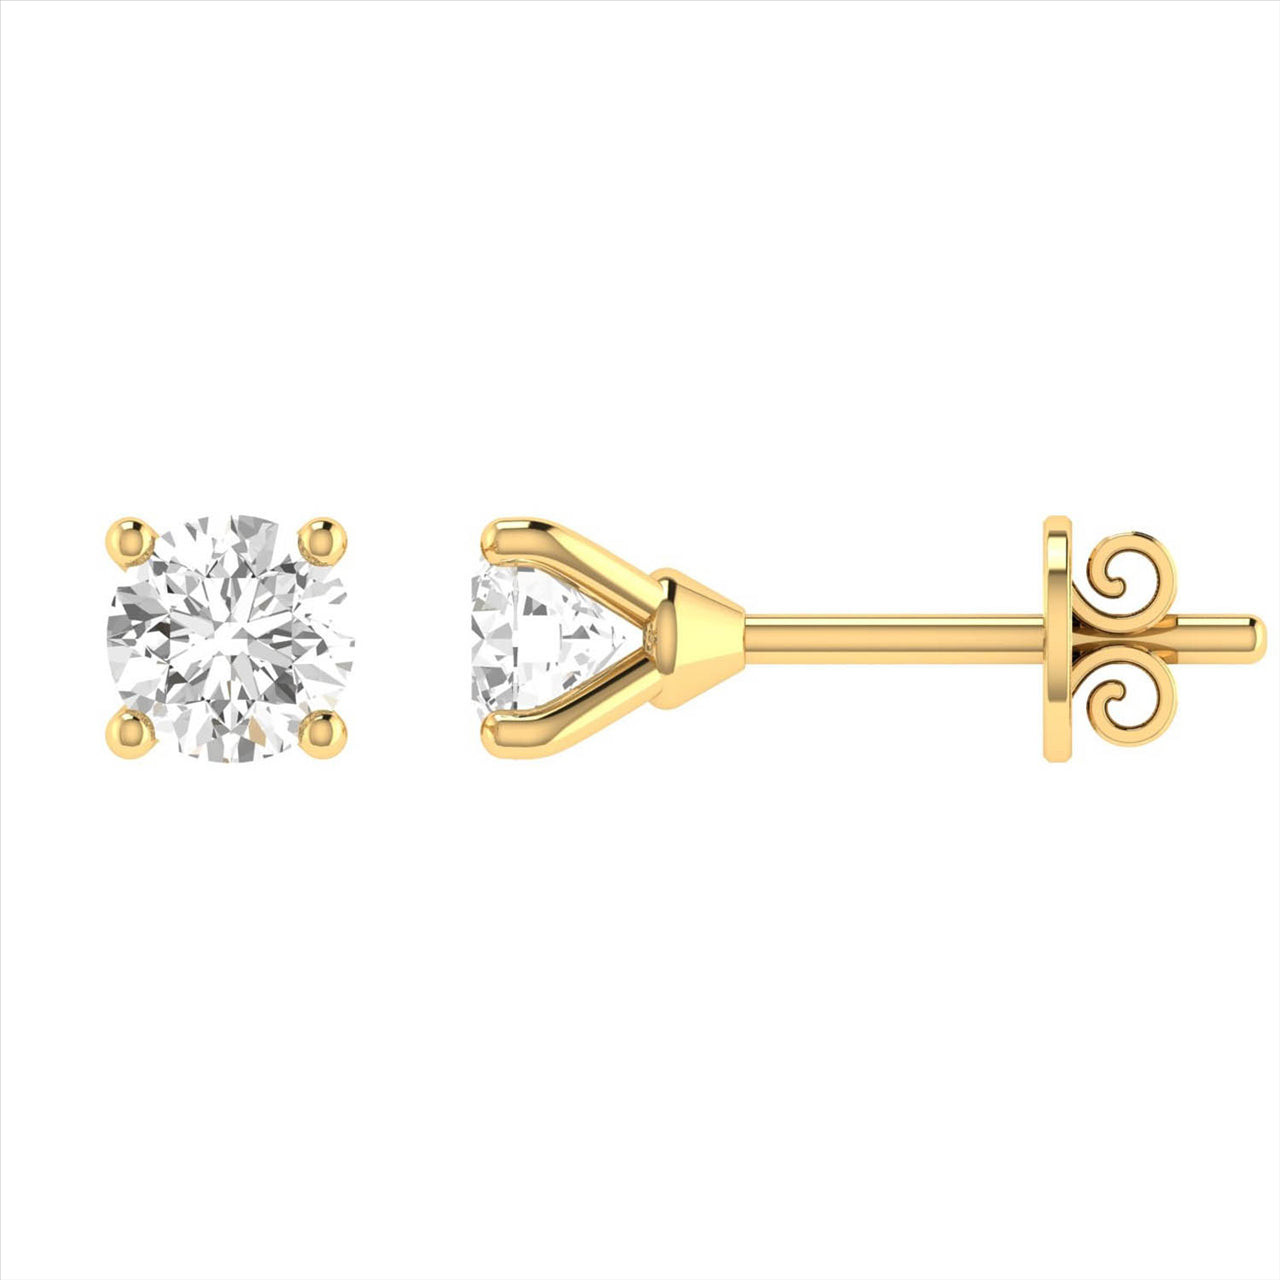 9ct Yellow Gold 4 claw Diamond Stud Earrings